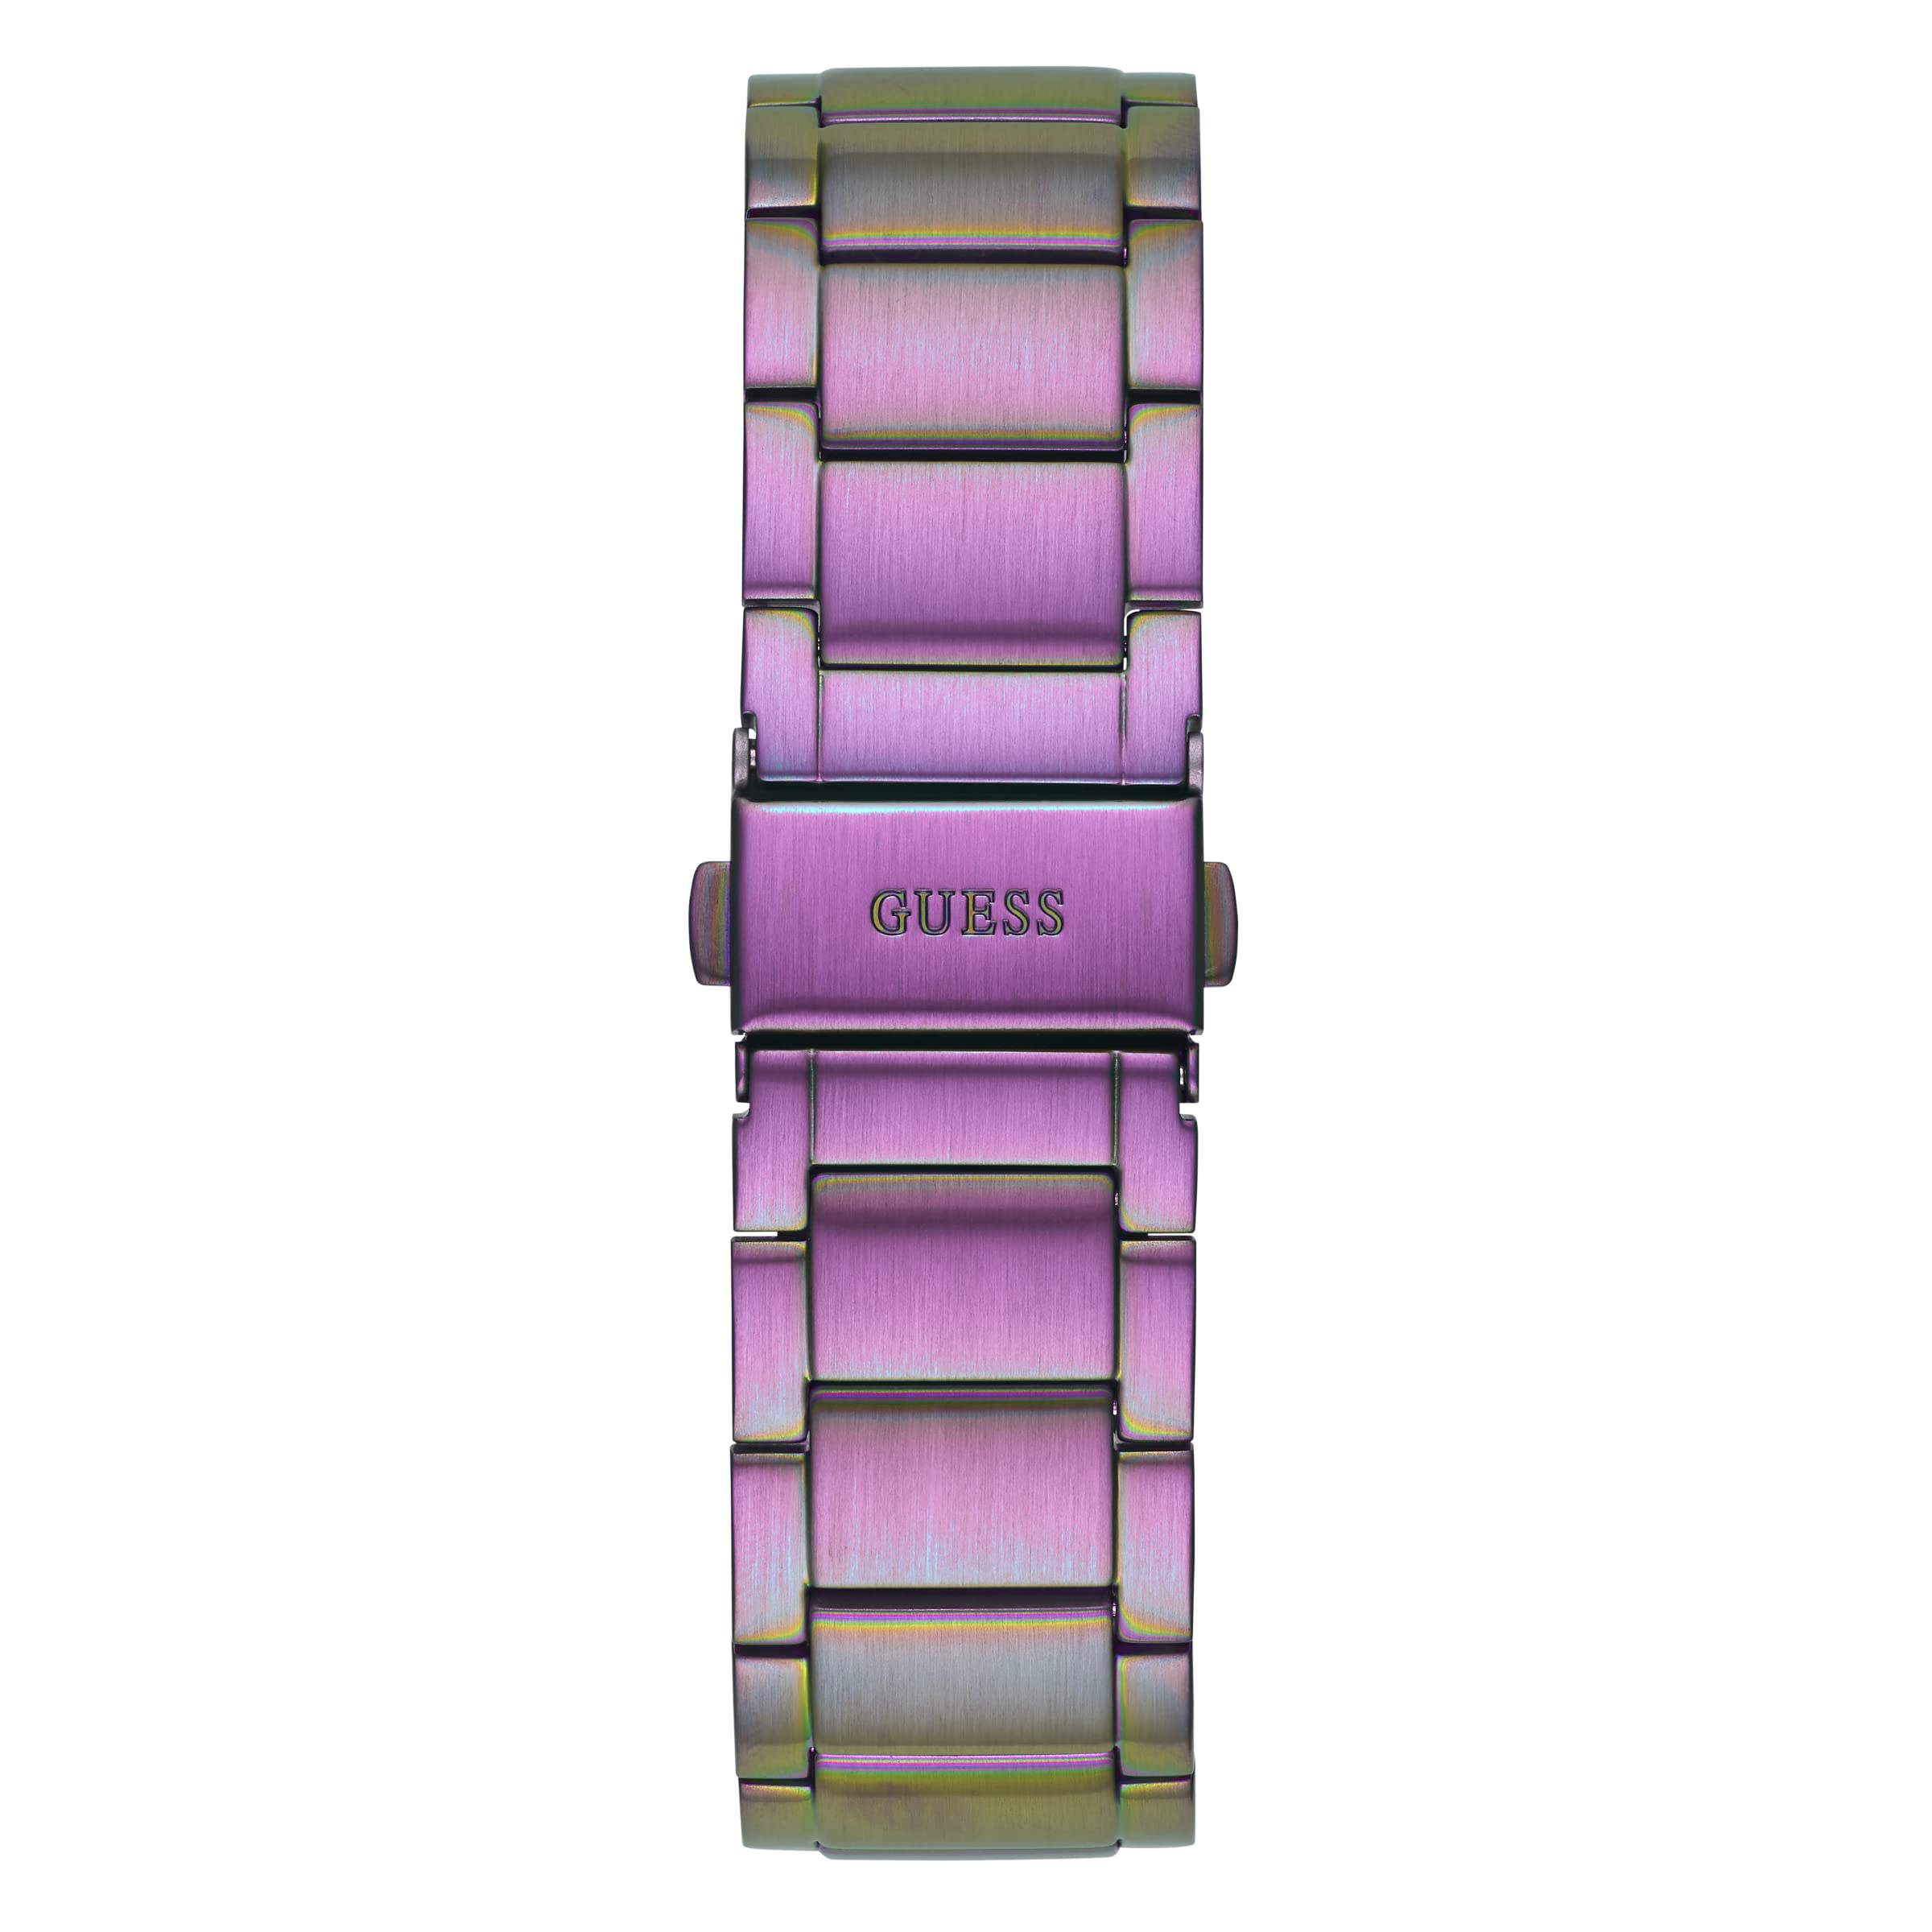 GUESS Ladies Sport Crystal Multifunction 36mm Watch